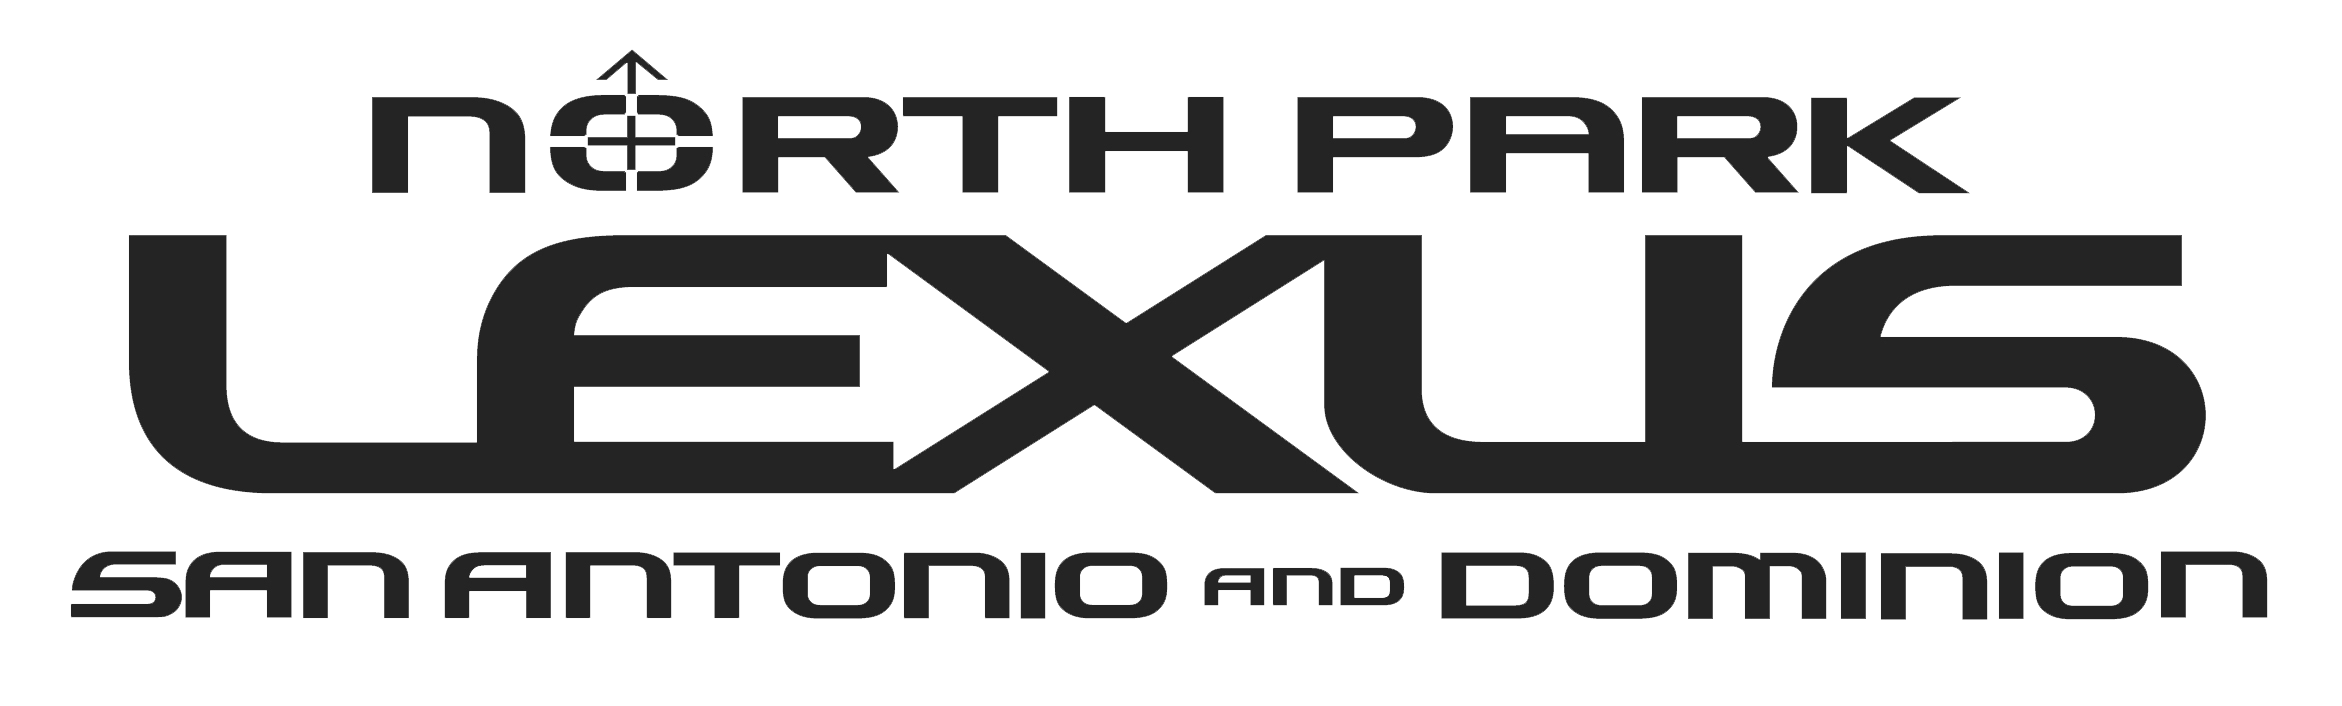 North Park Lexus San Antonio and Dominion Logo